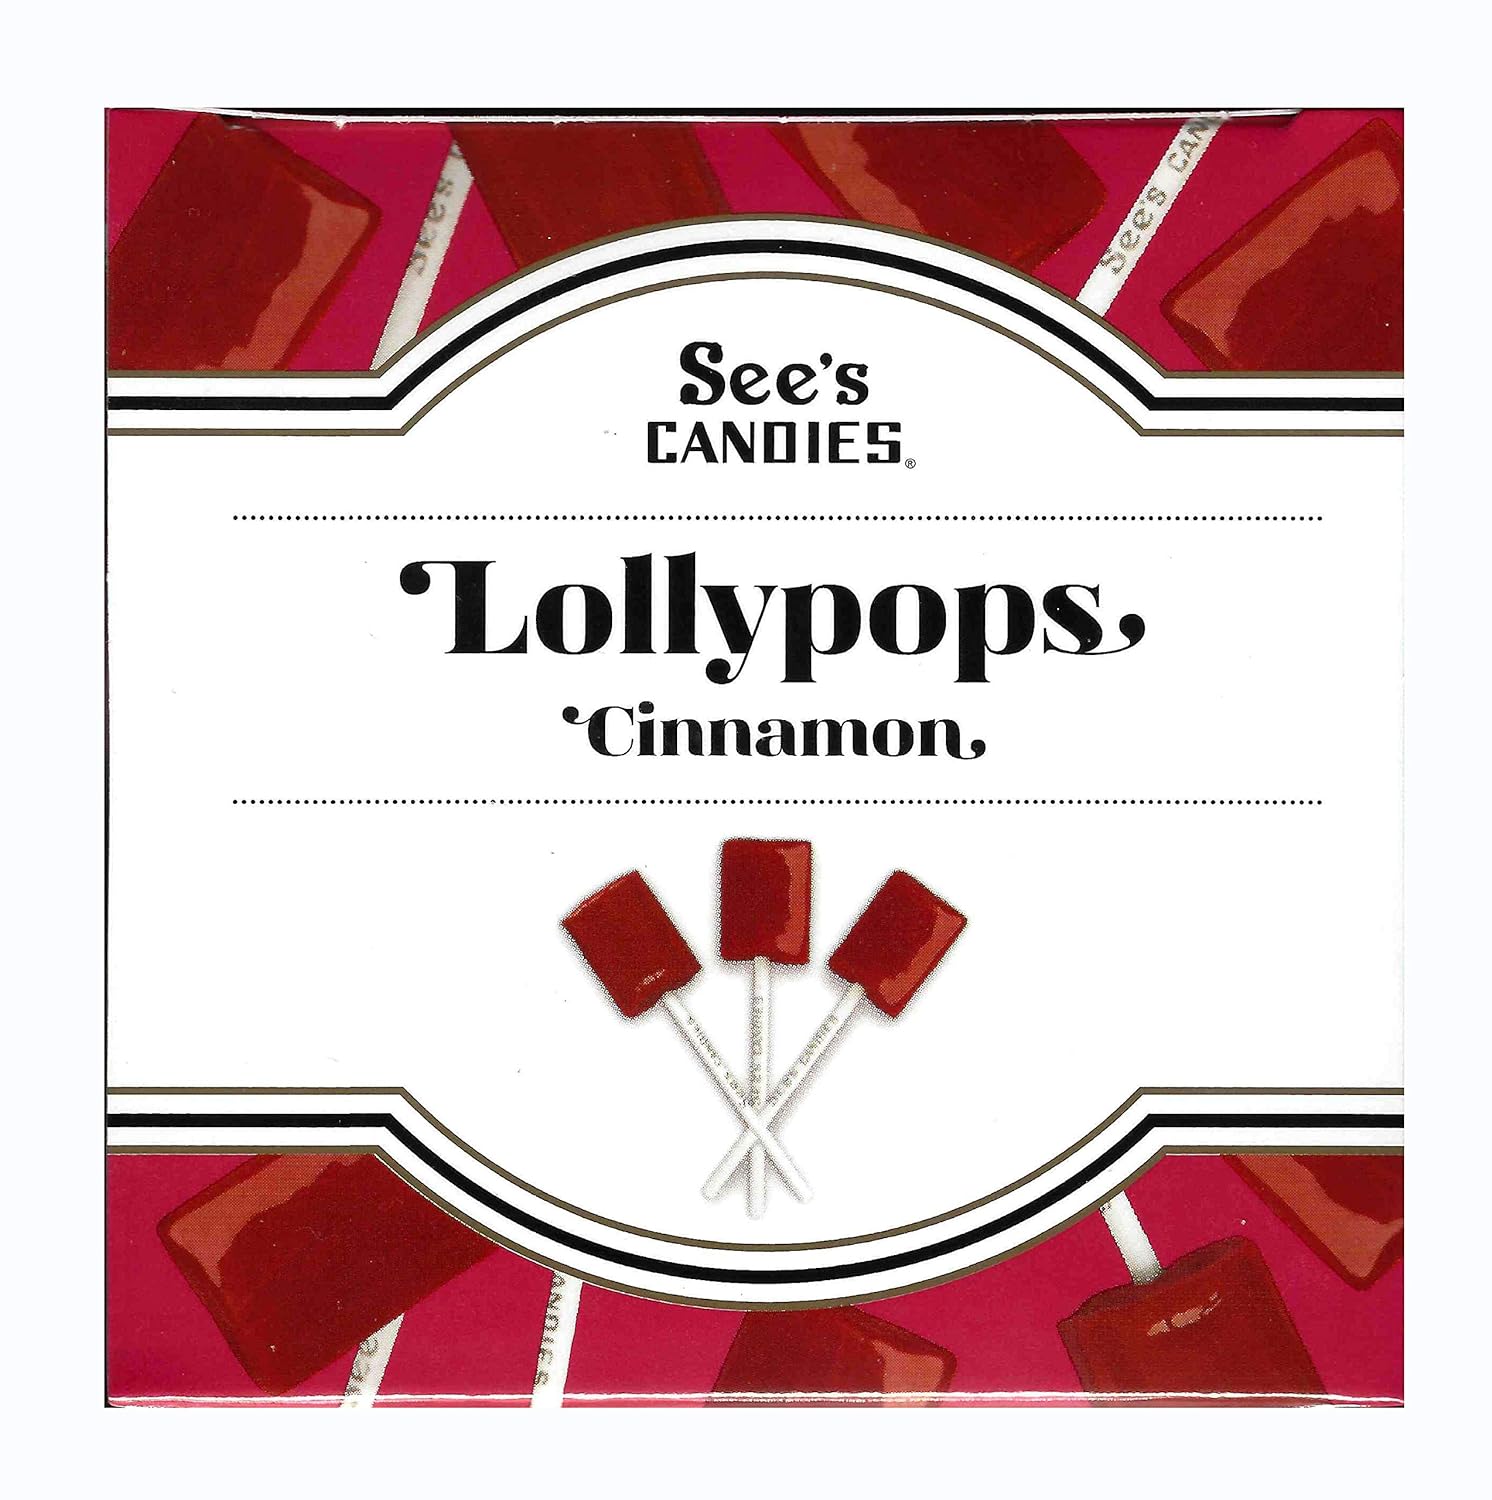  Sees Candies 8.4 oz. Cinnamon Lollypops